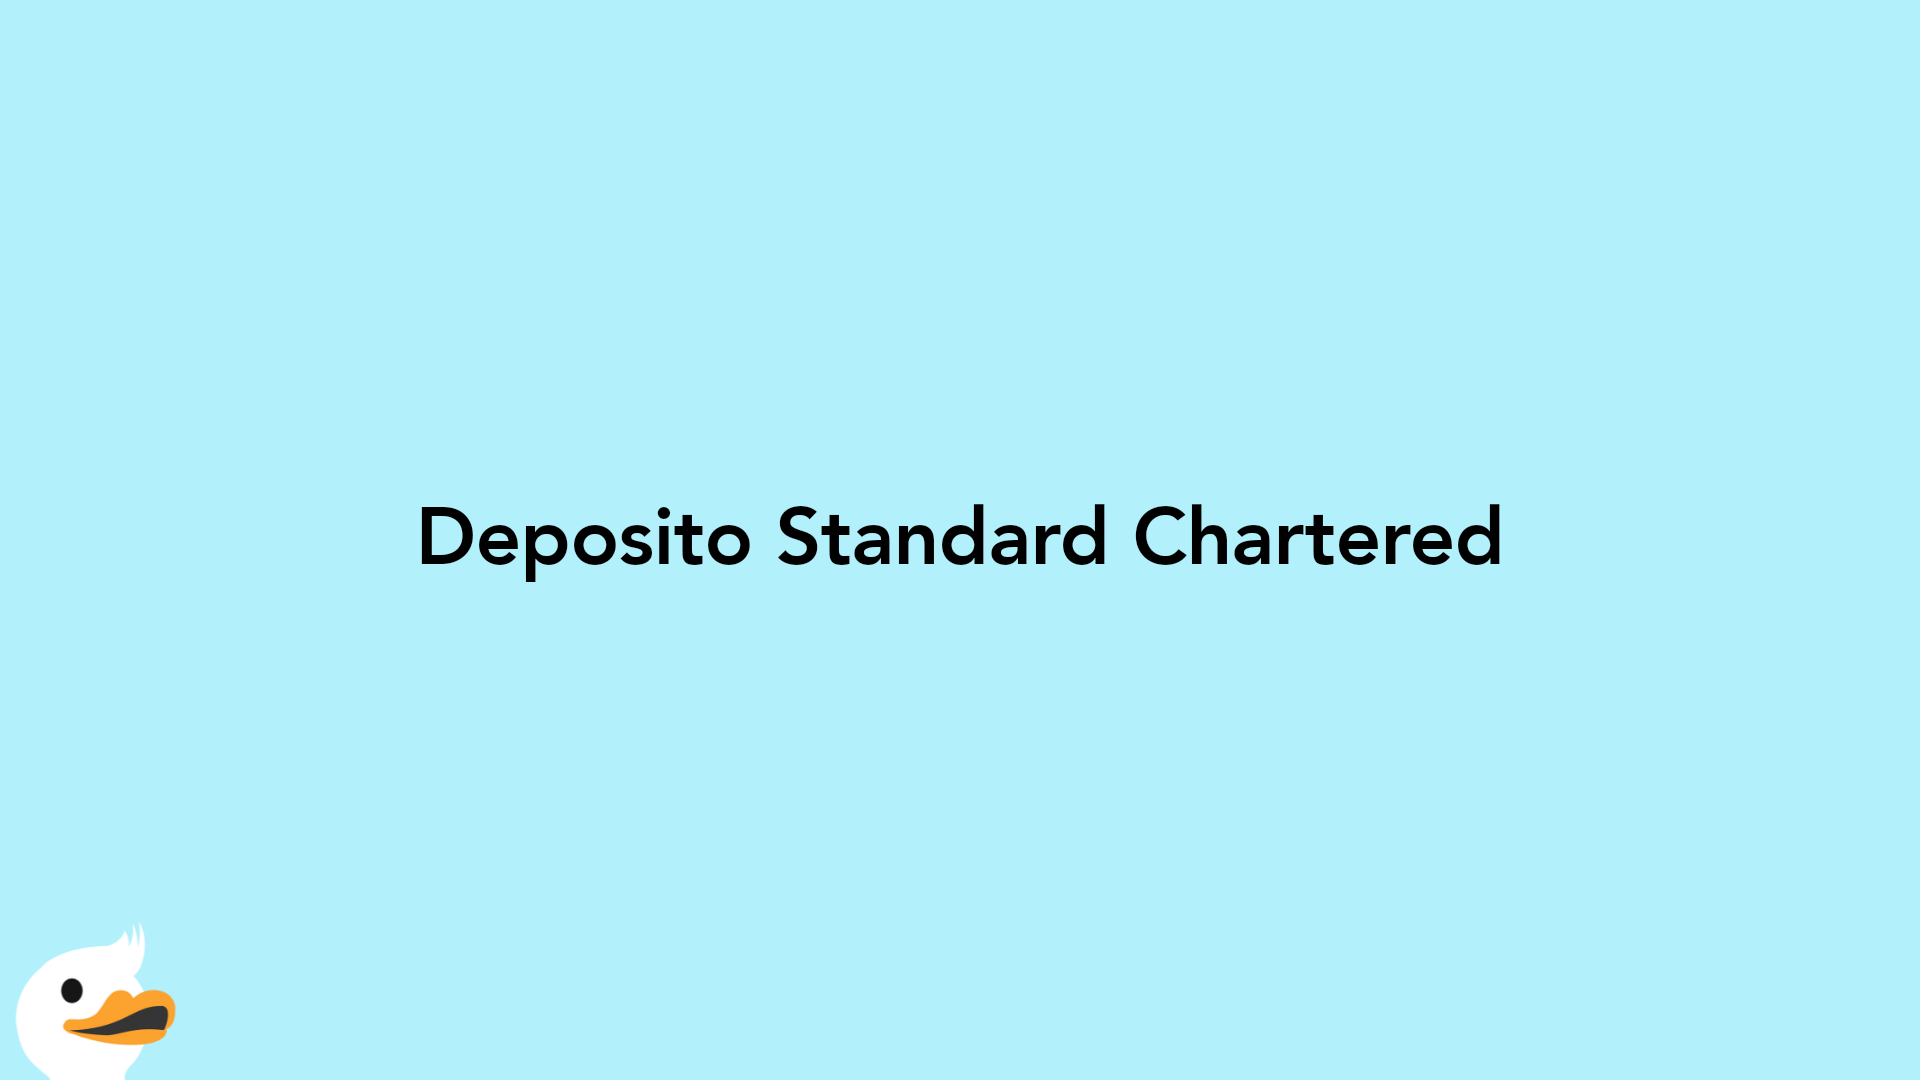 Deposito Standard Chartered